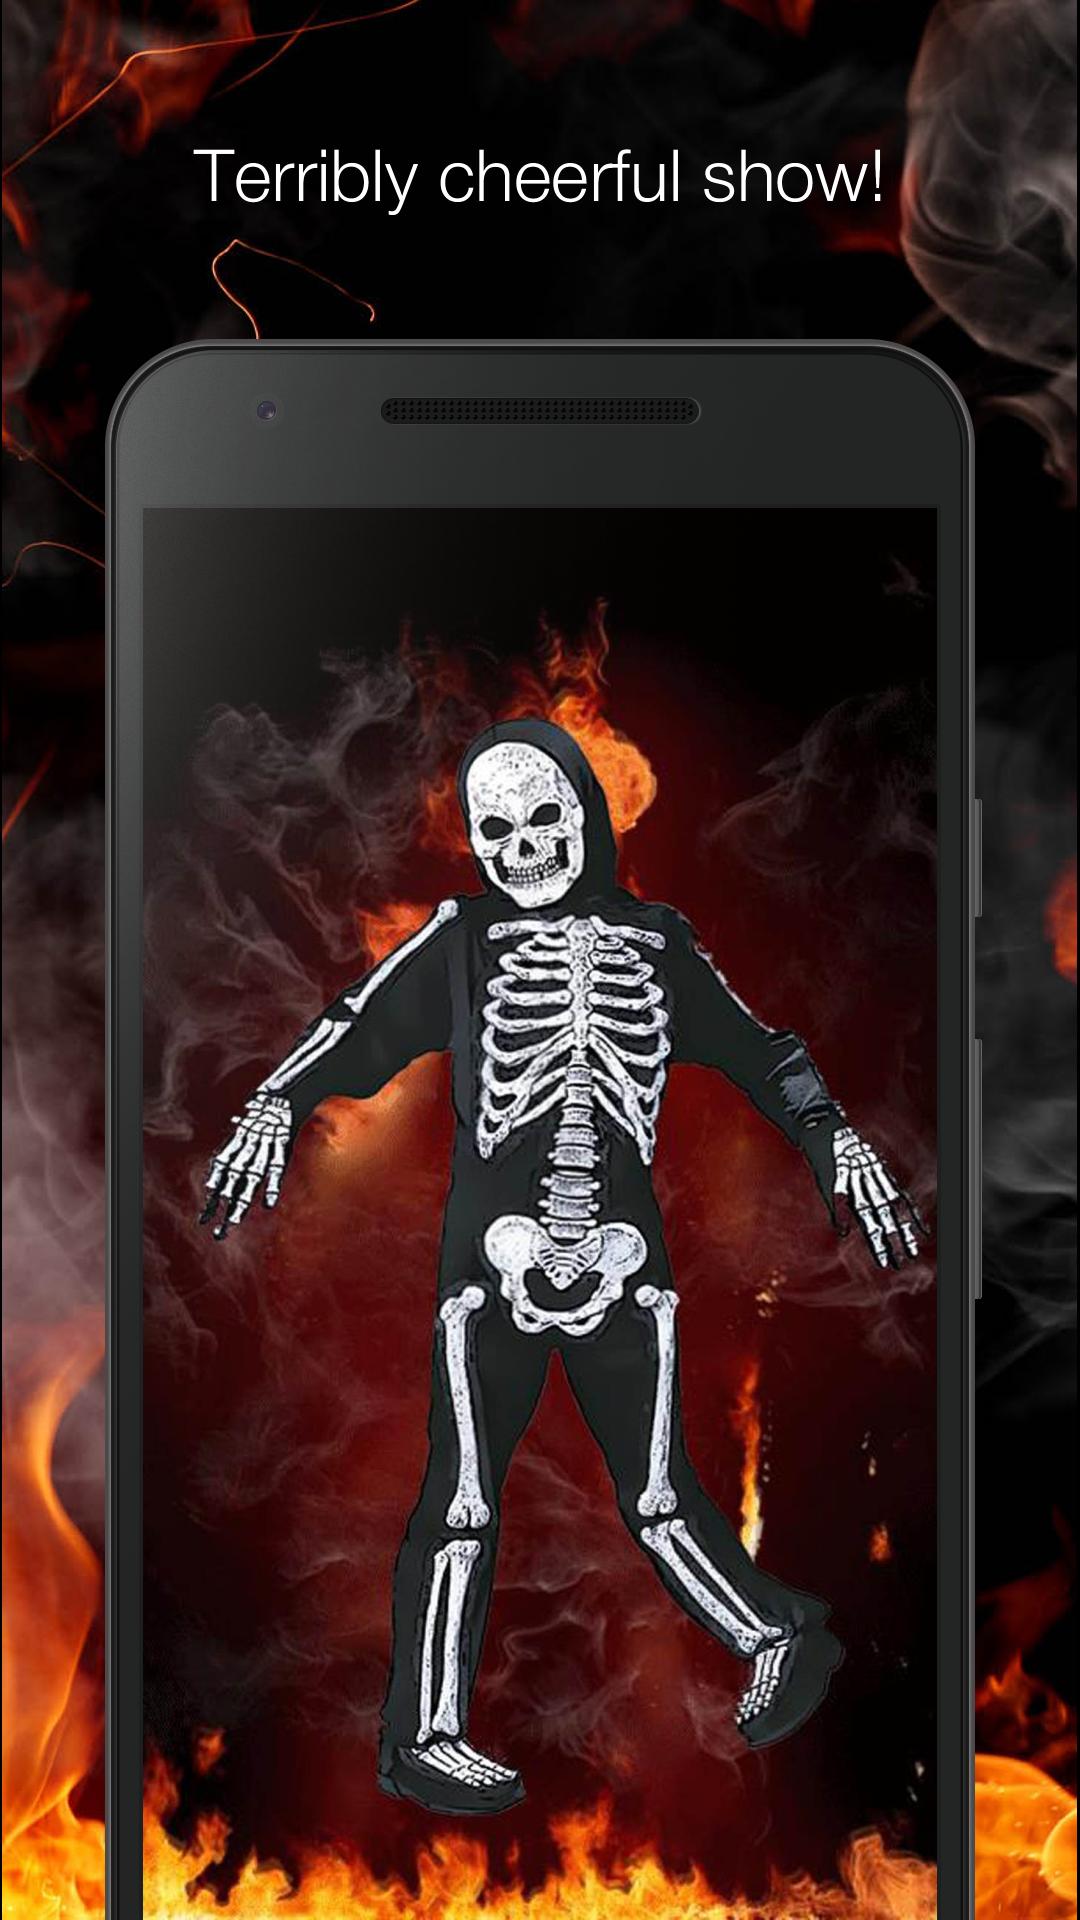 Dancing Skeleton Live Wallpaper For Android Apk Download - animated dancing skeleton roblox